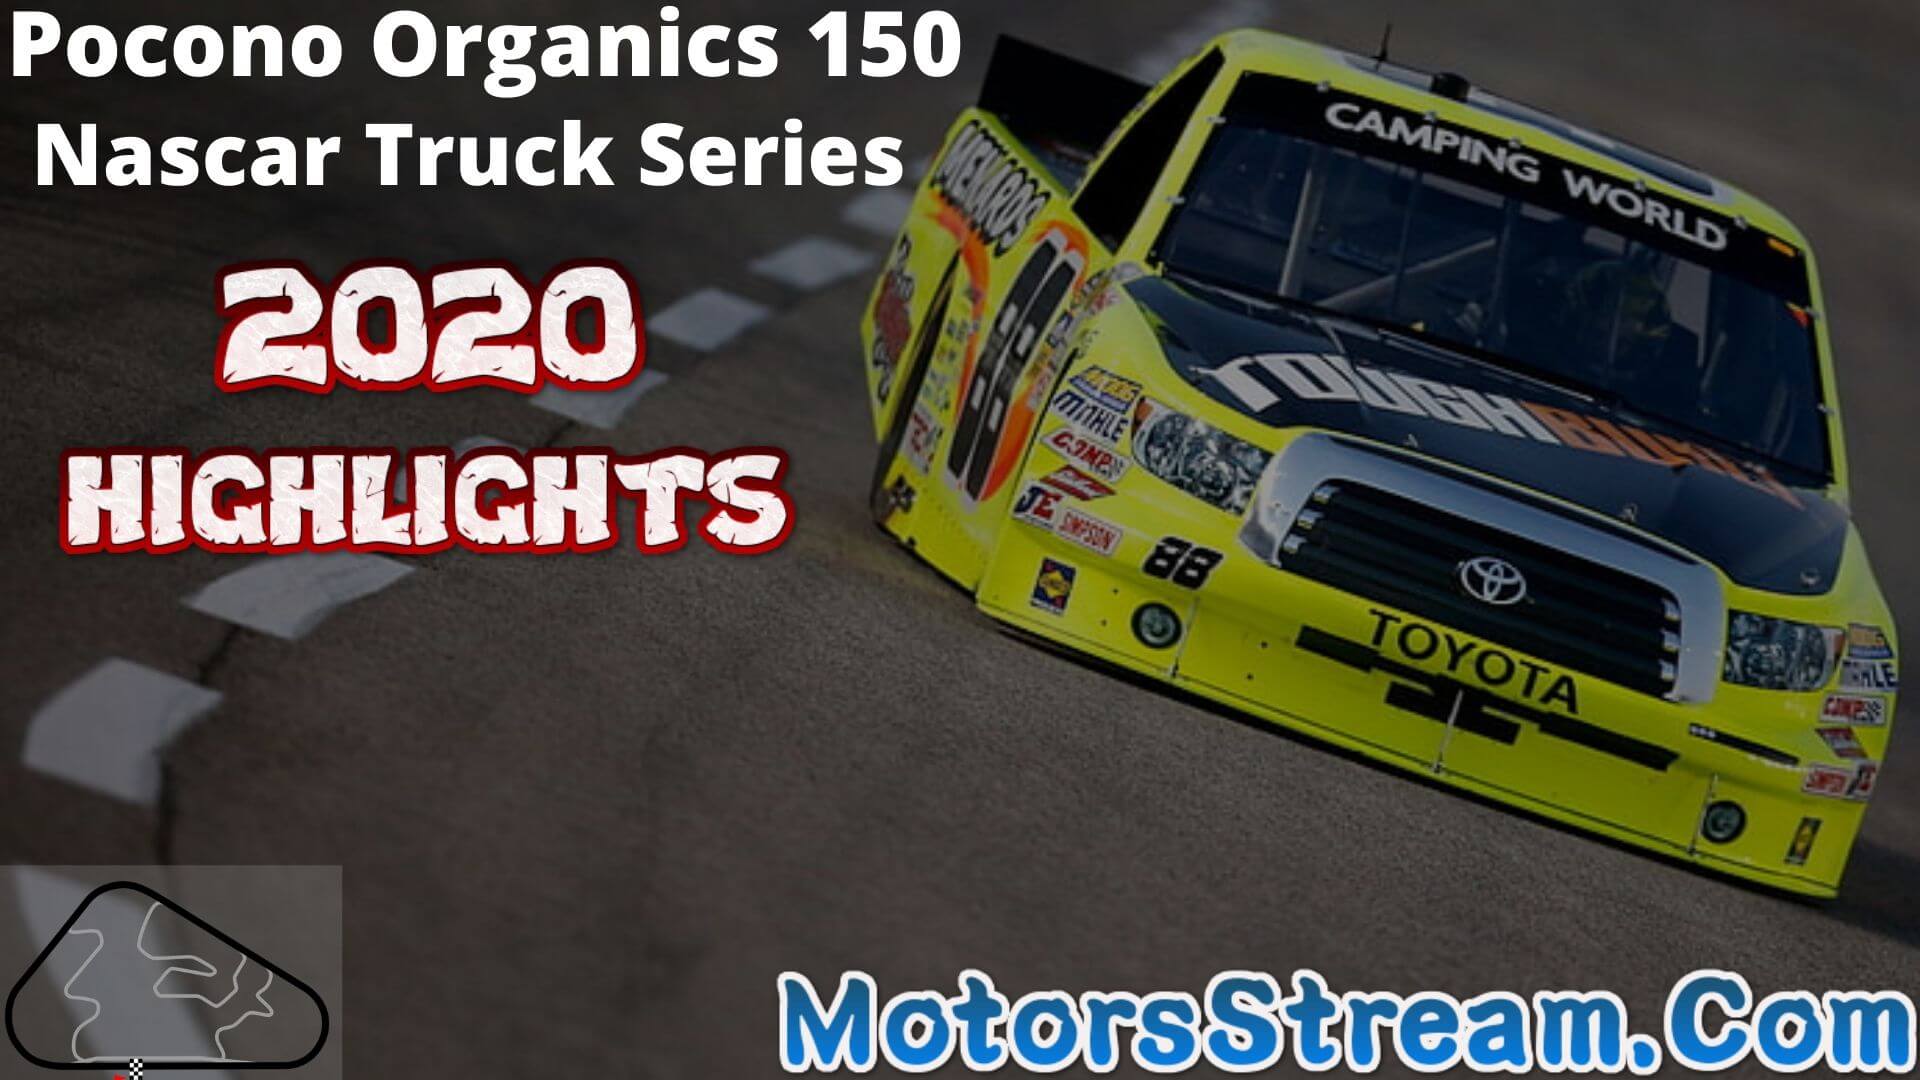 Pocono Organics 150 Highlights 2020 Nascar Truck Series